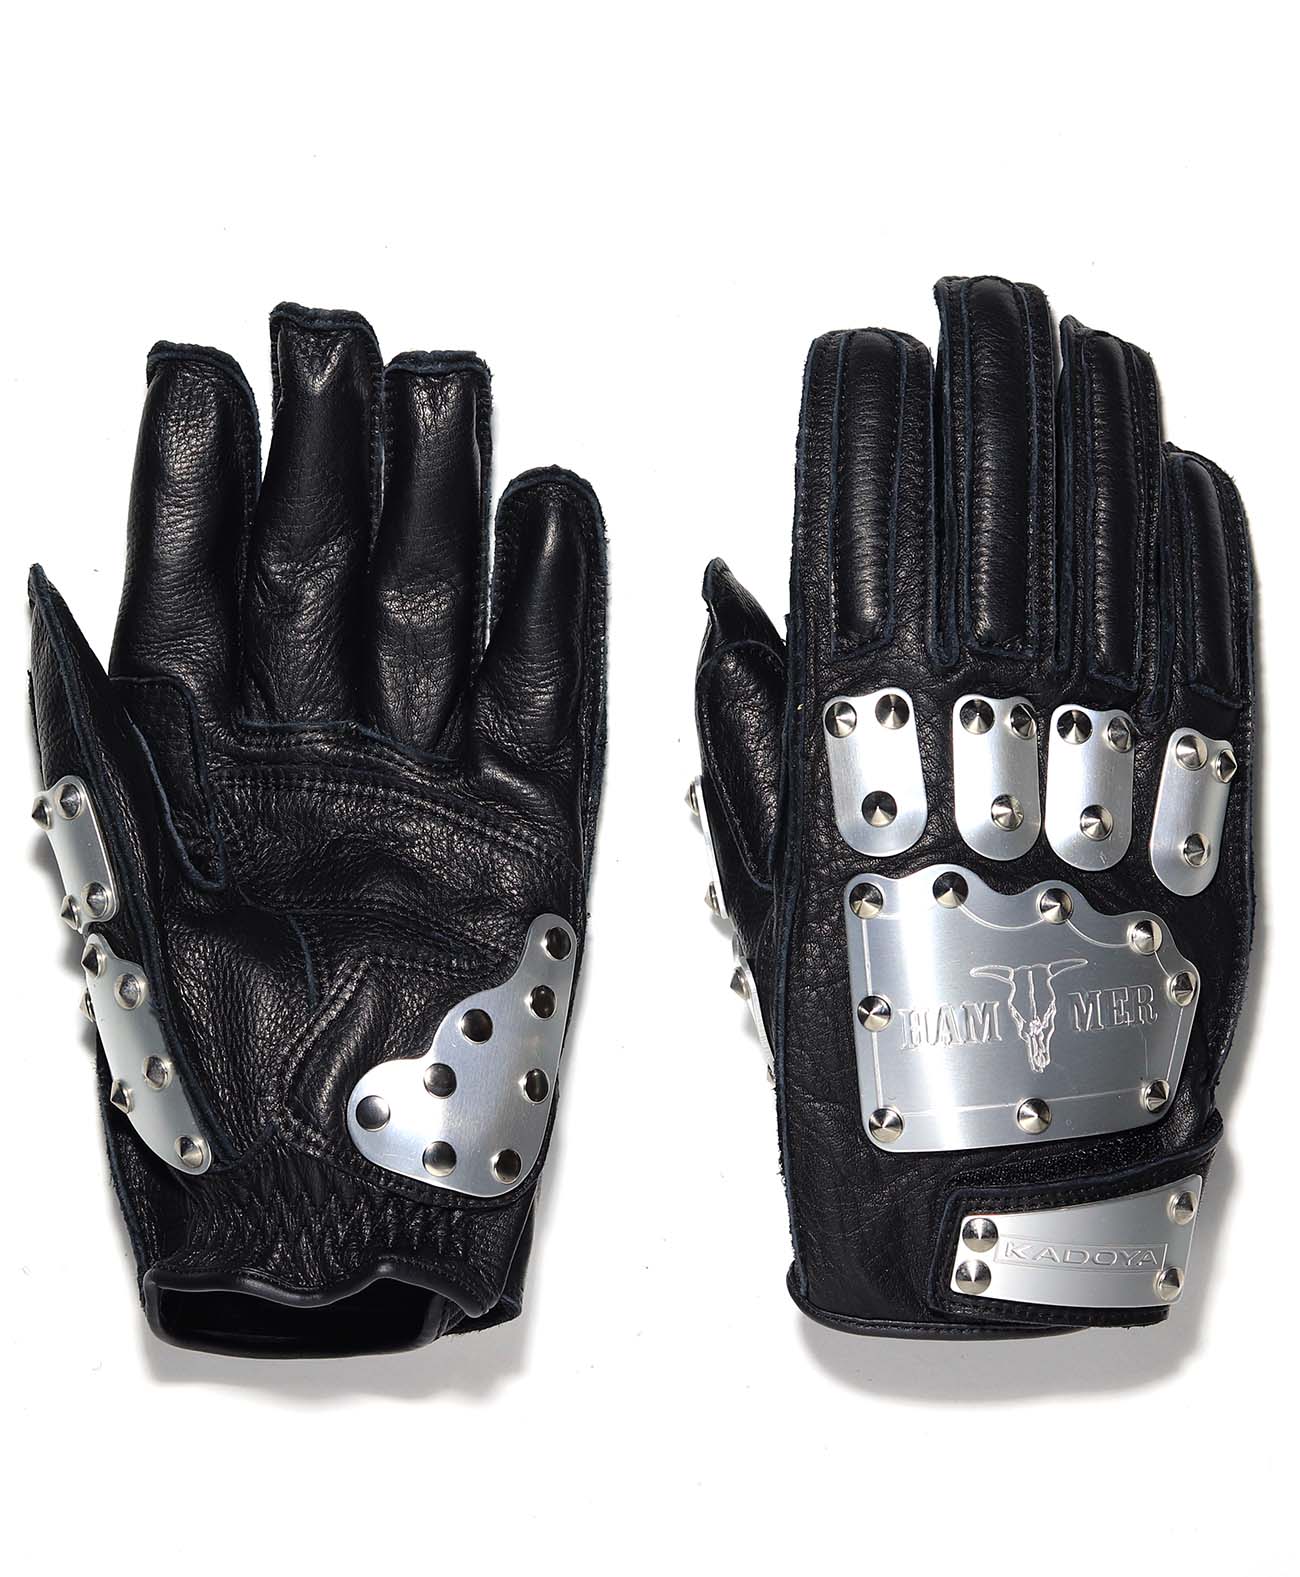 Hammer Glove A / Silver / Black